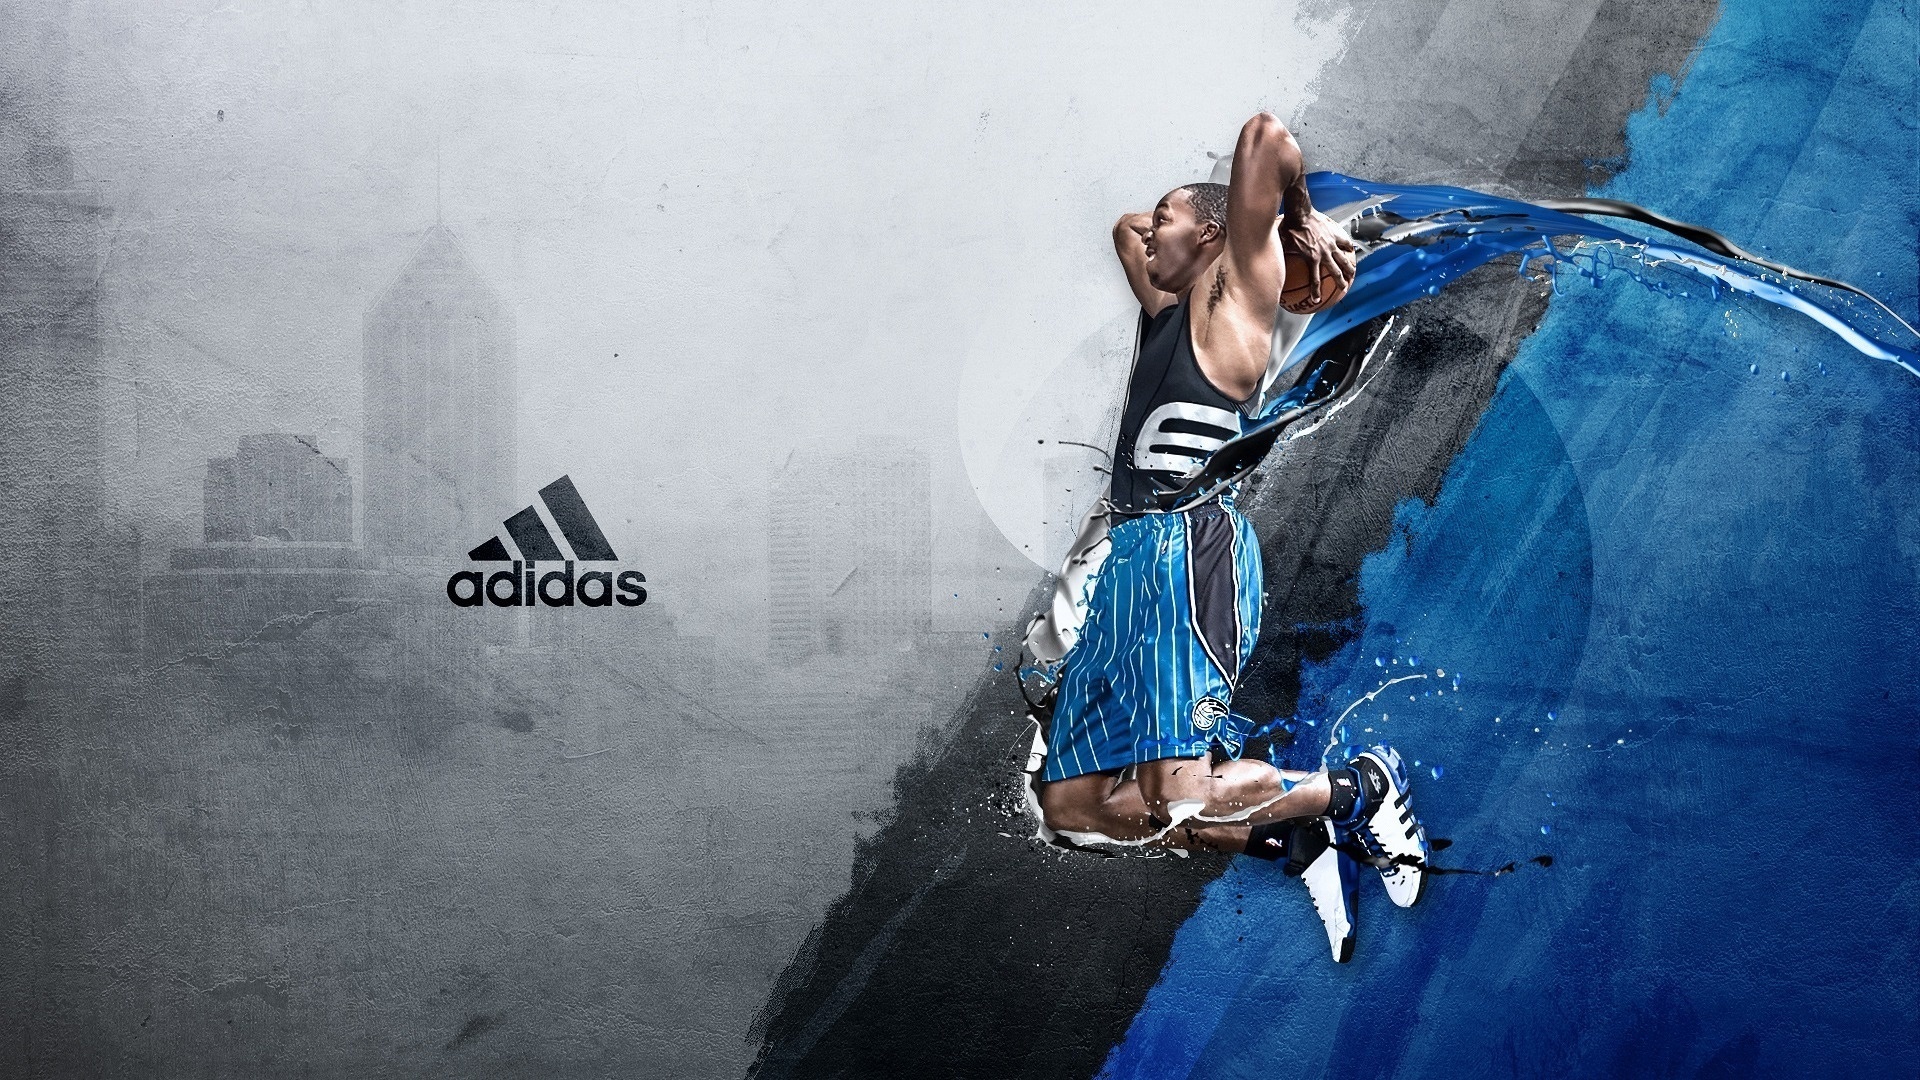 Adidas Nba Basketball Wallpaper HD